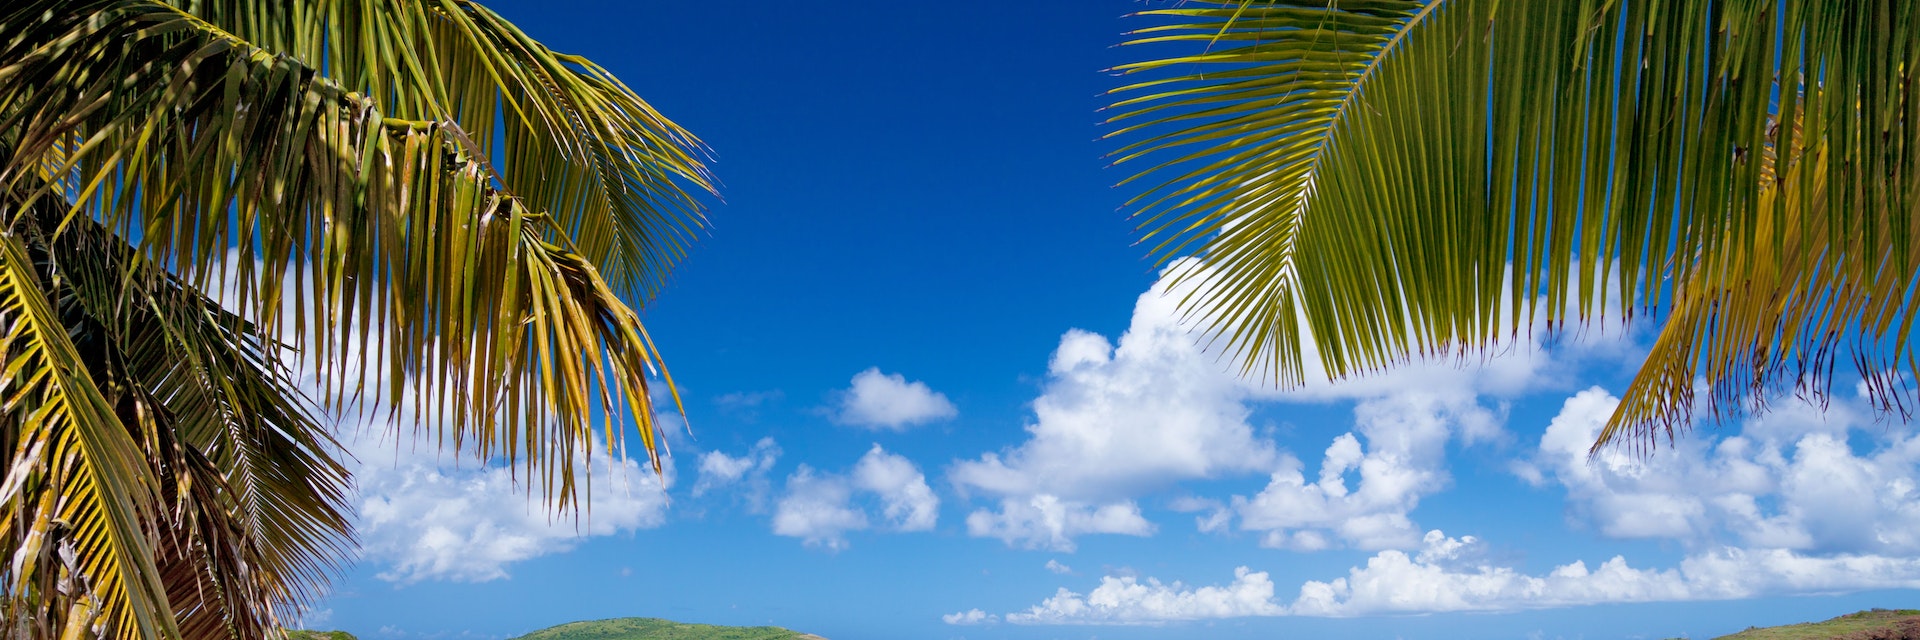 palm trees at Playa Tortuga (Turtle Beach) on Isla Culebrita, Puerto Rico